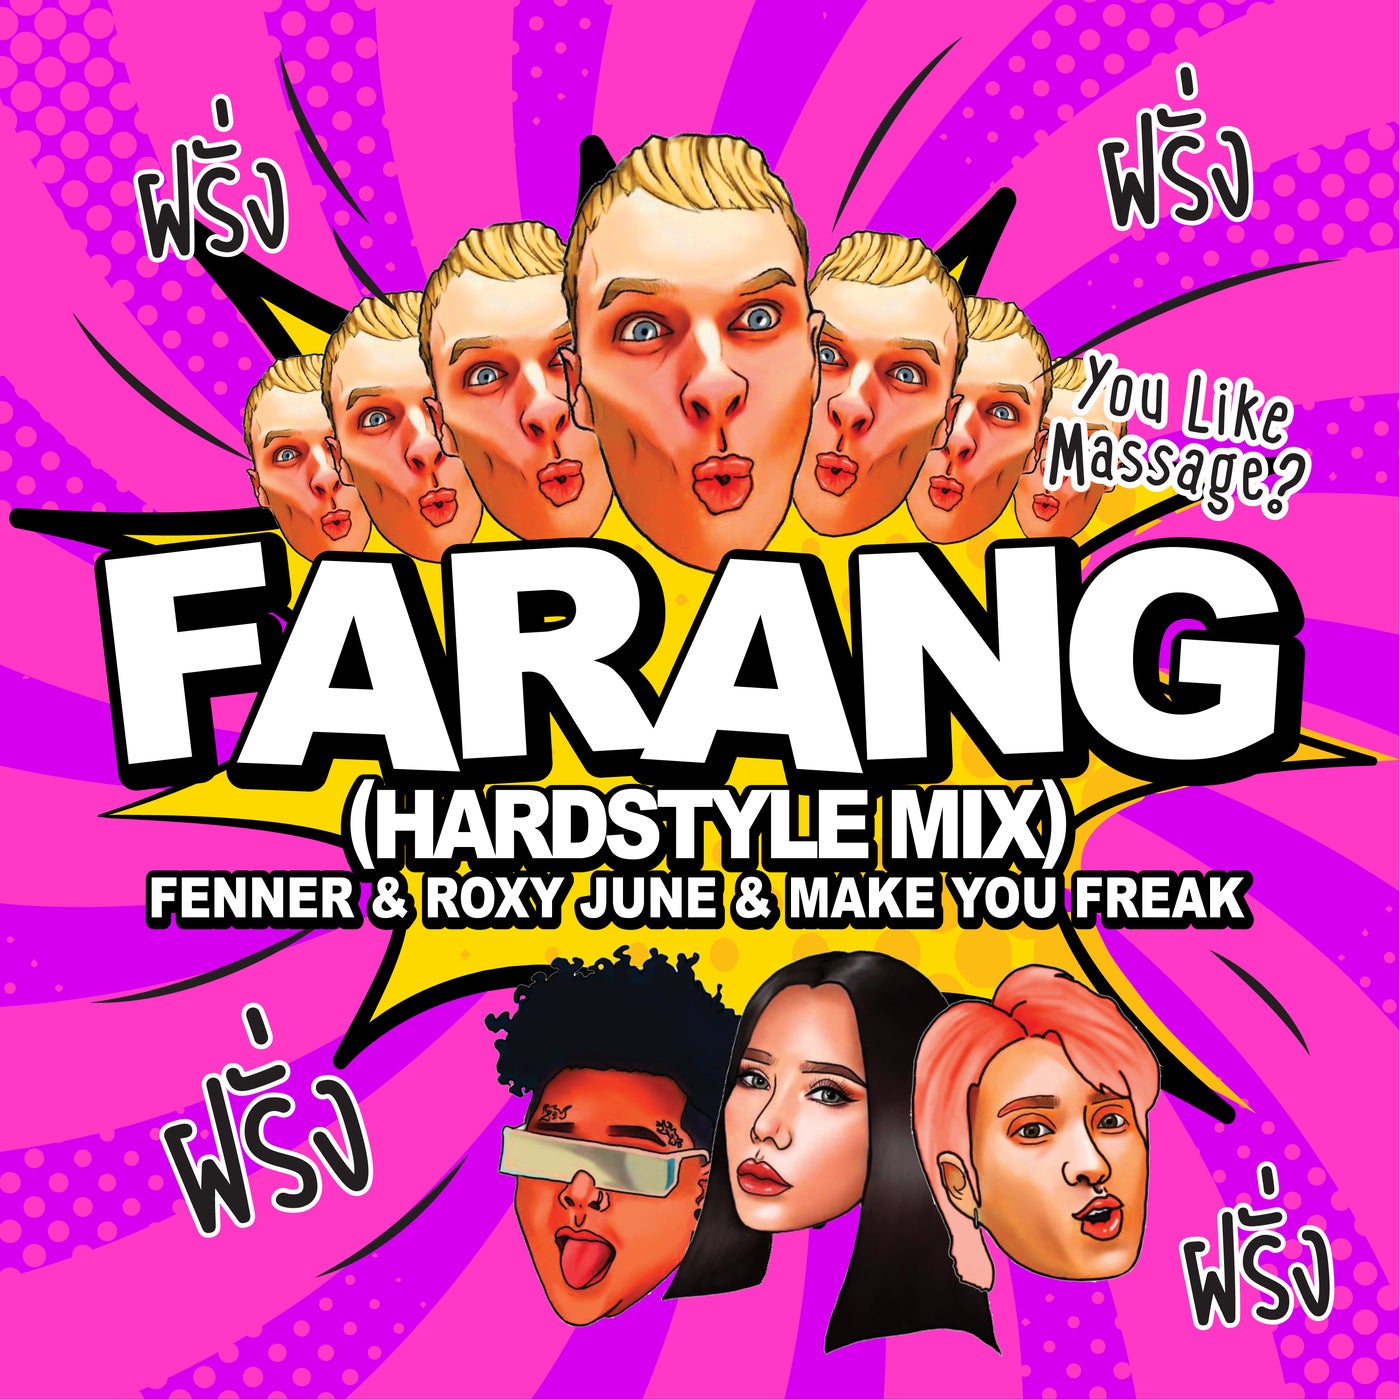 Farang - Hardstyle Mix